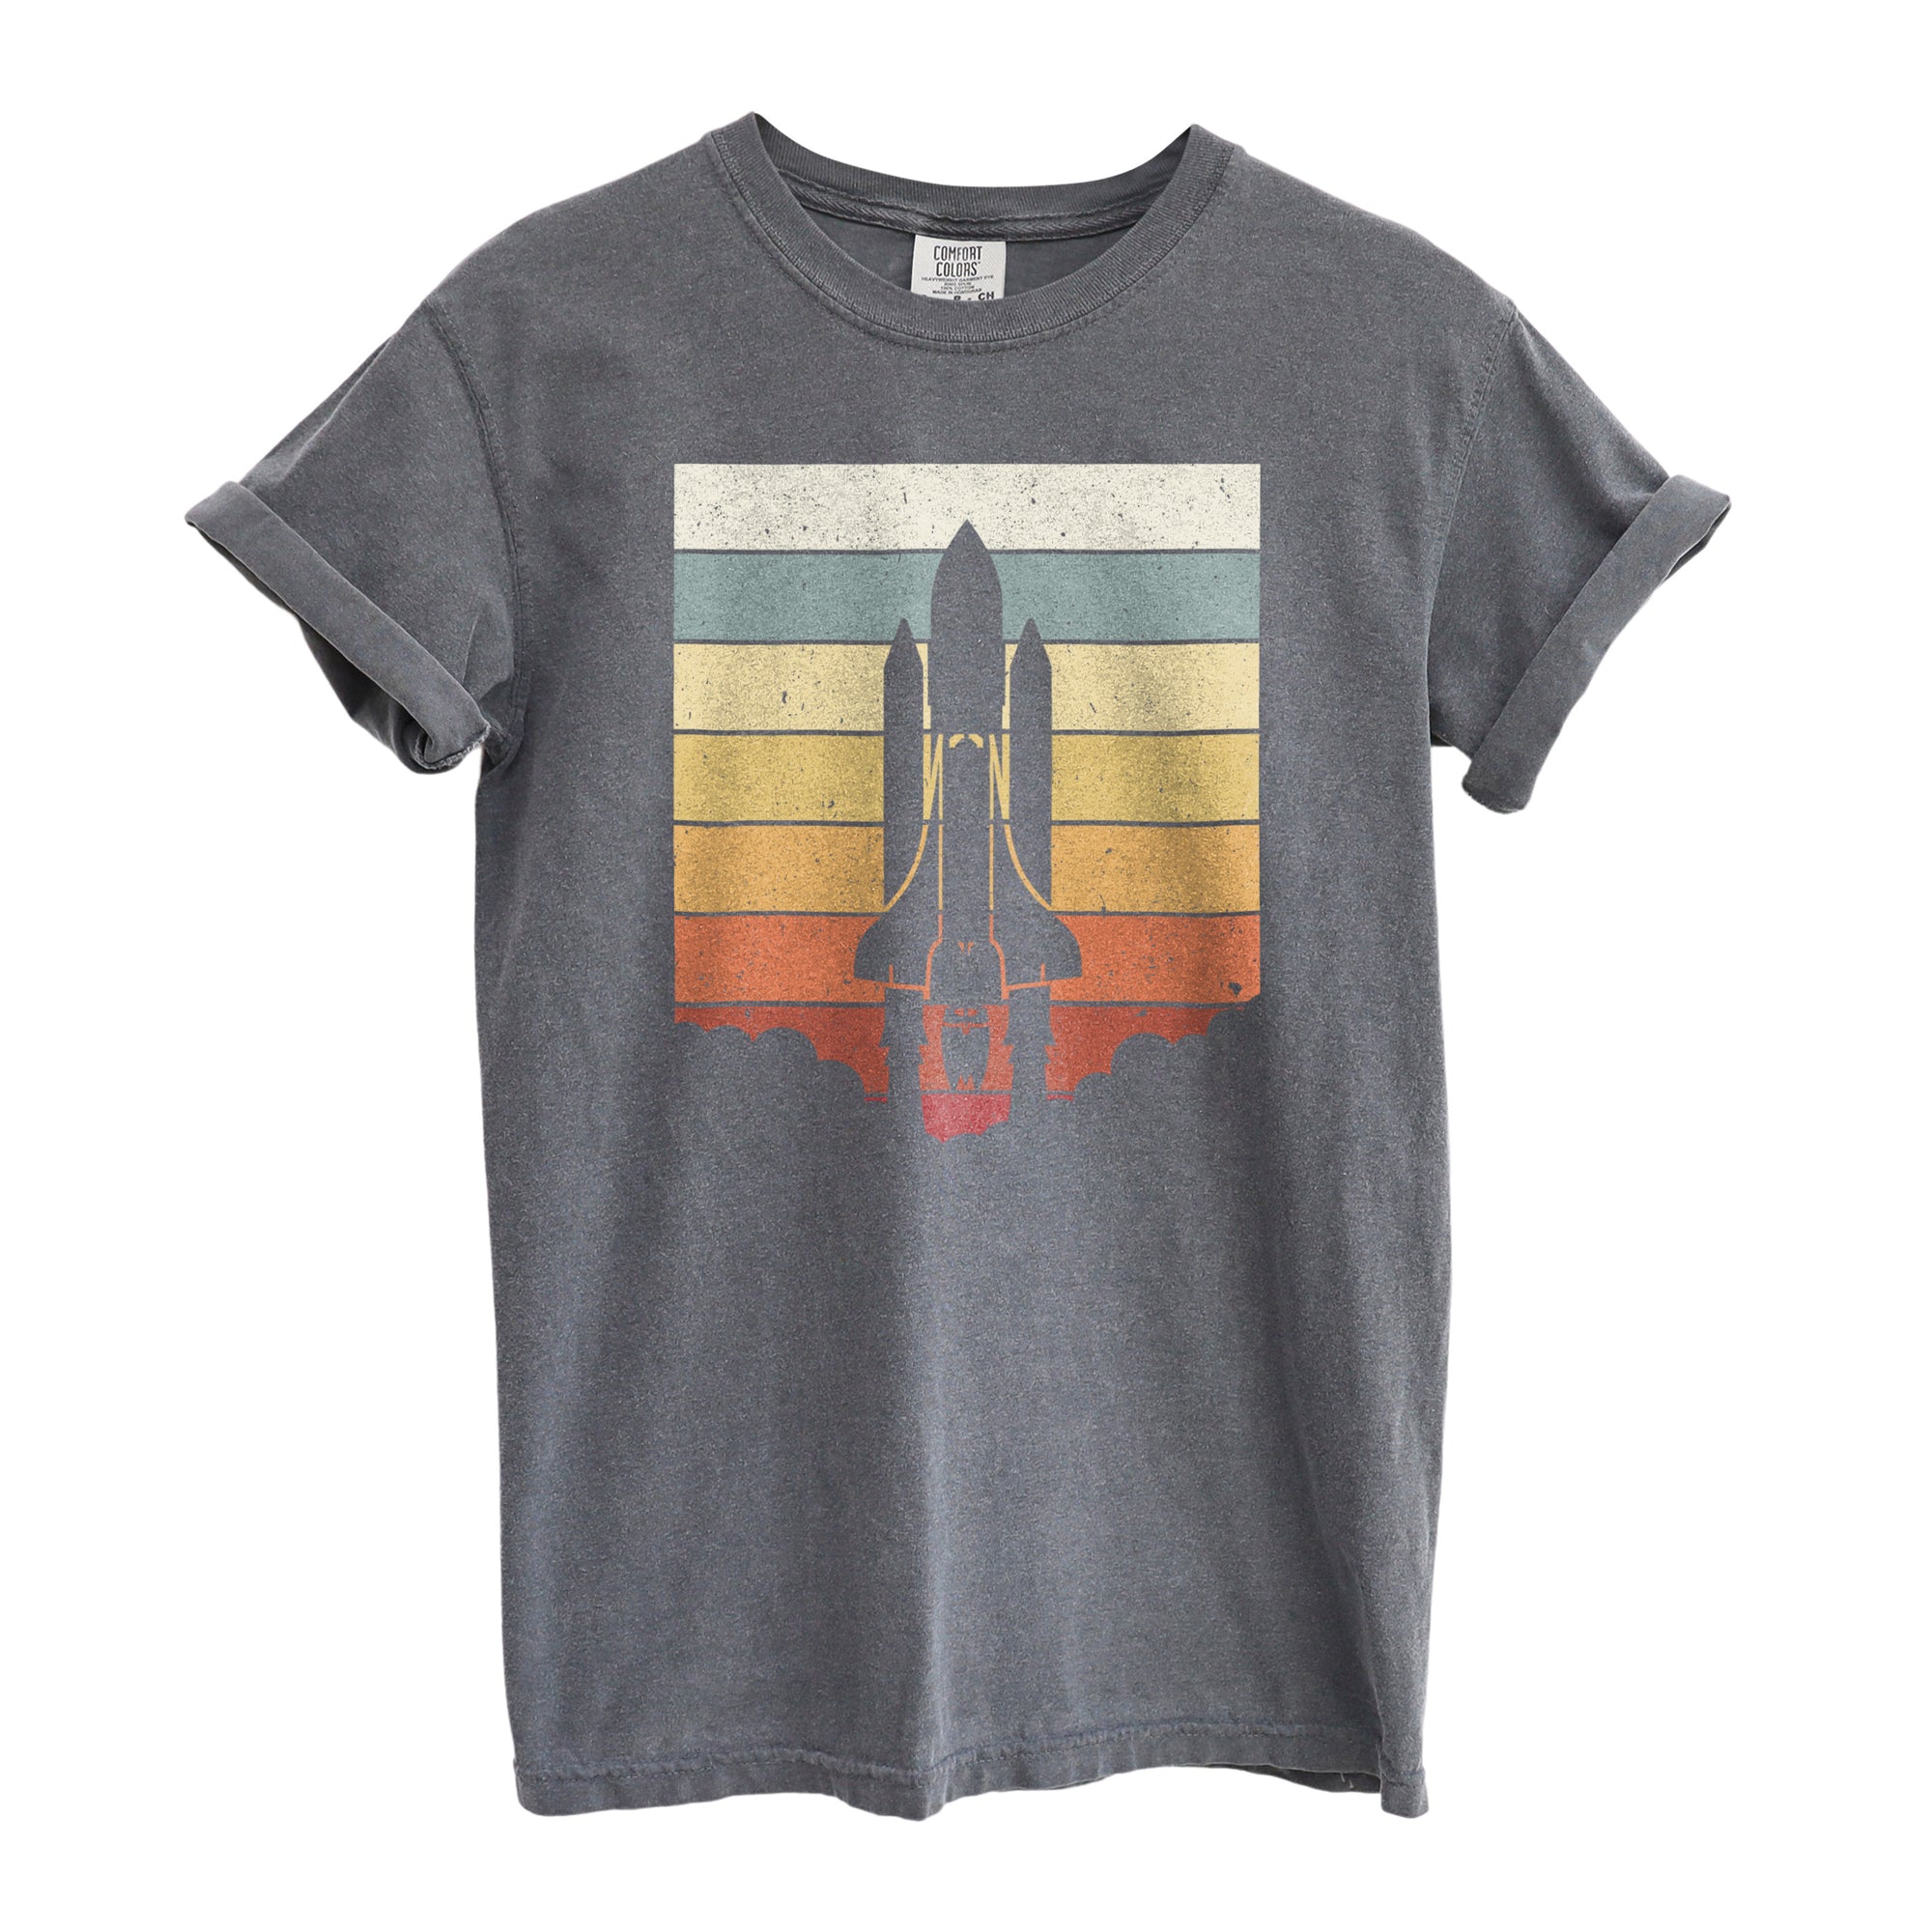 Retro Rocket Oversized Shirt for Women Garment-Dyed Graphic Tee